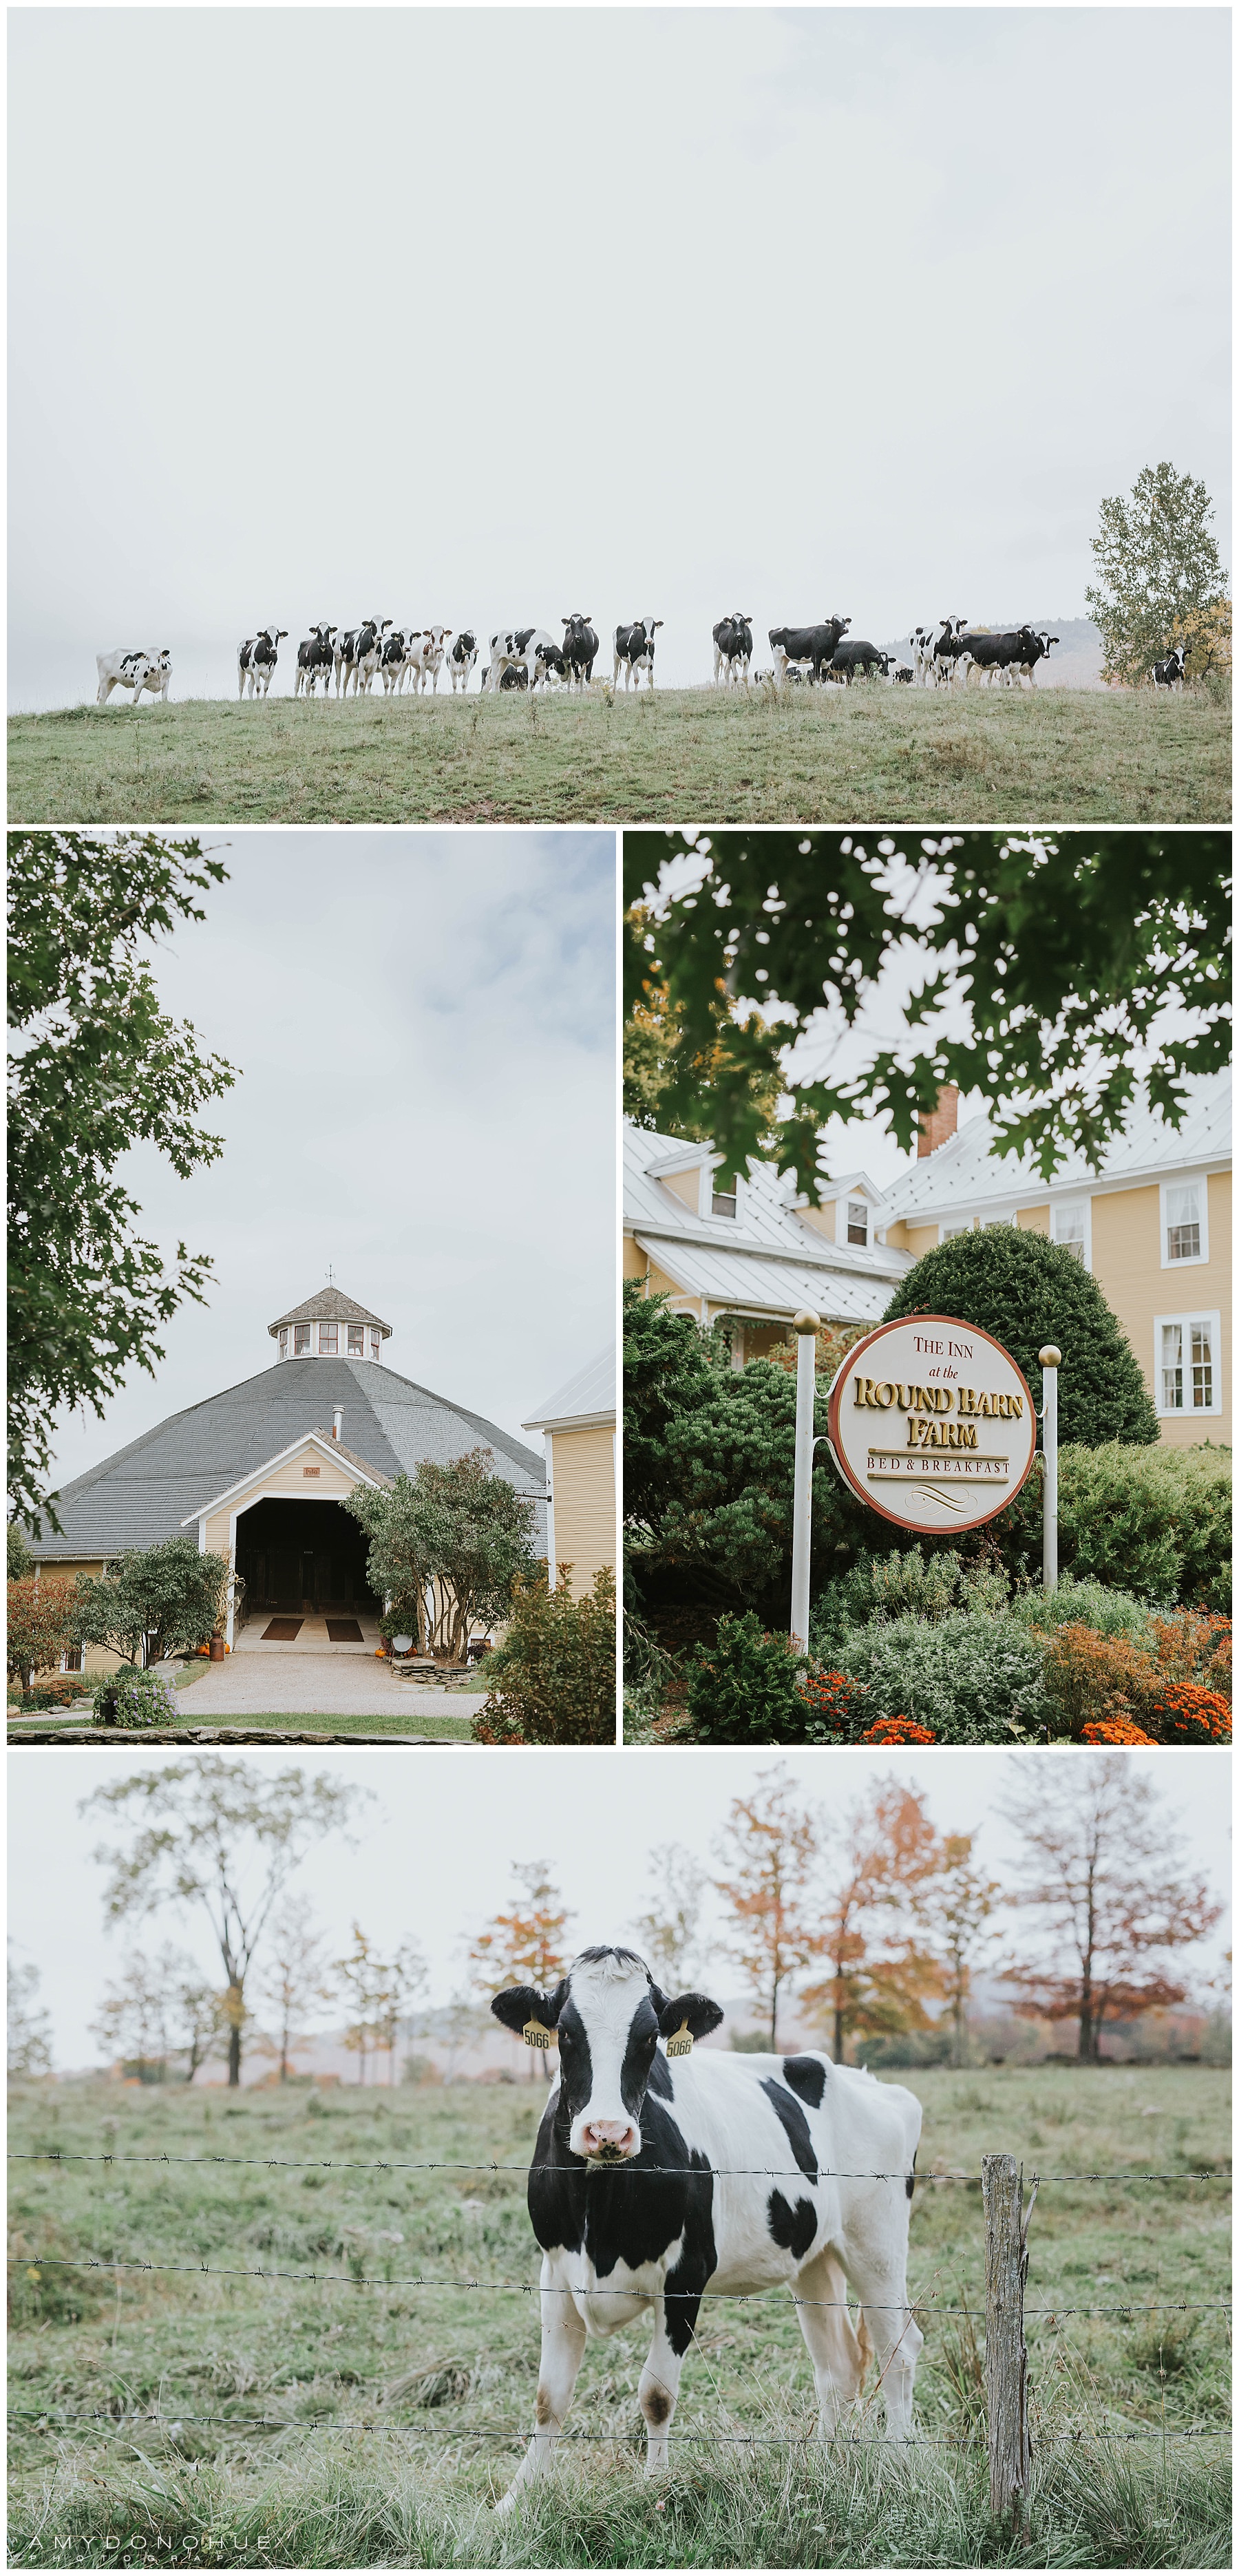 Wedding Venue | The Inn at Round Barn Farm | © Amy Donohue Photography